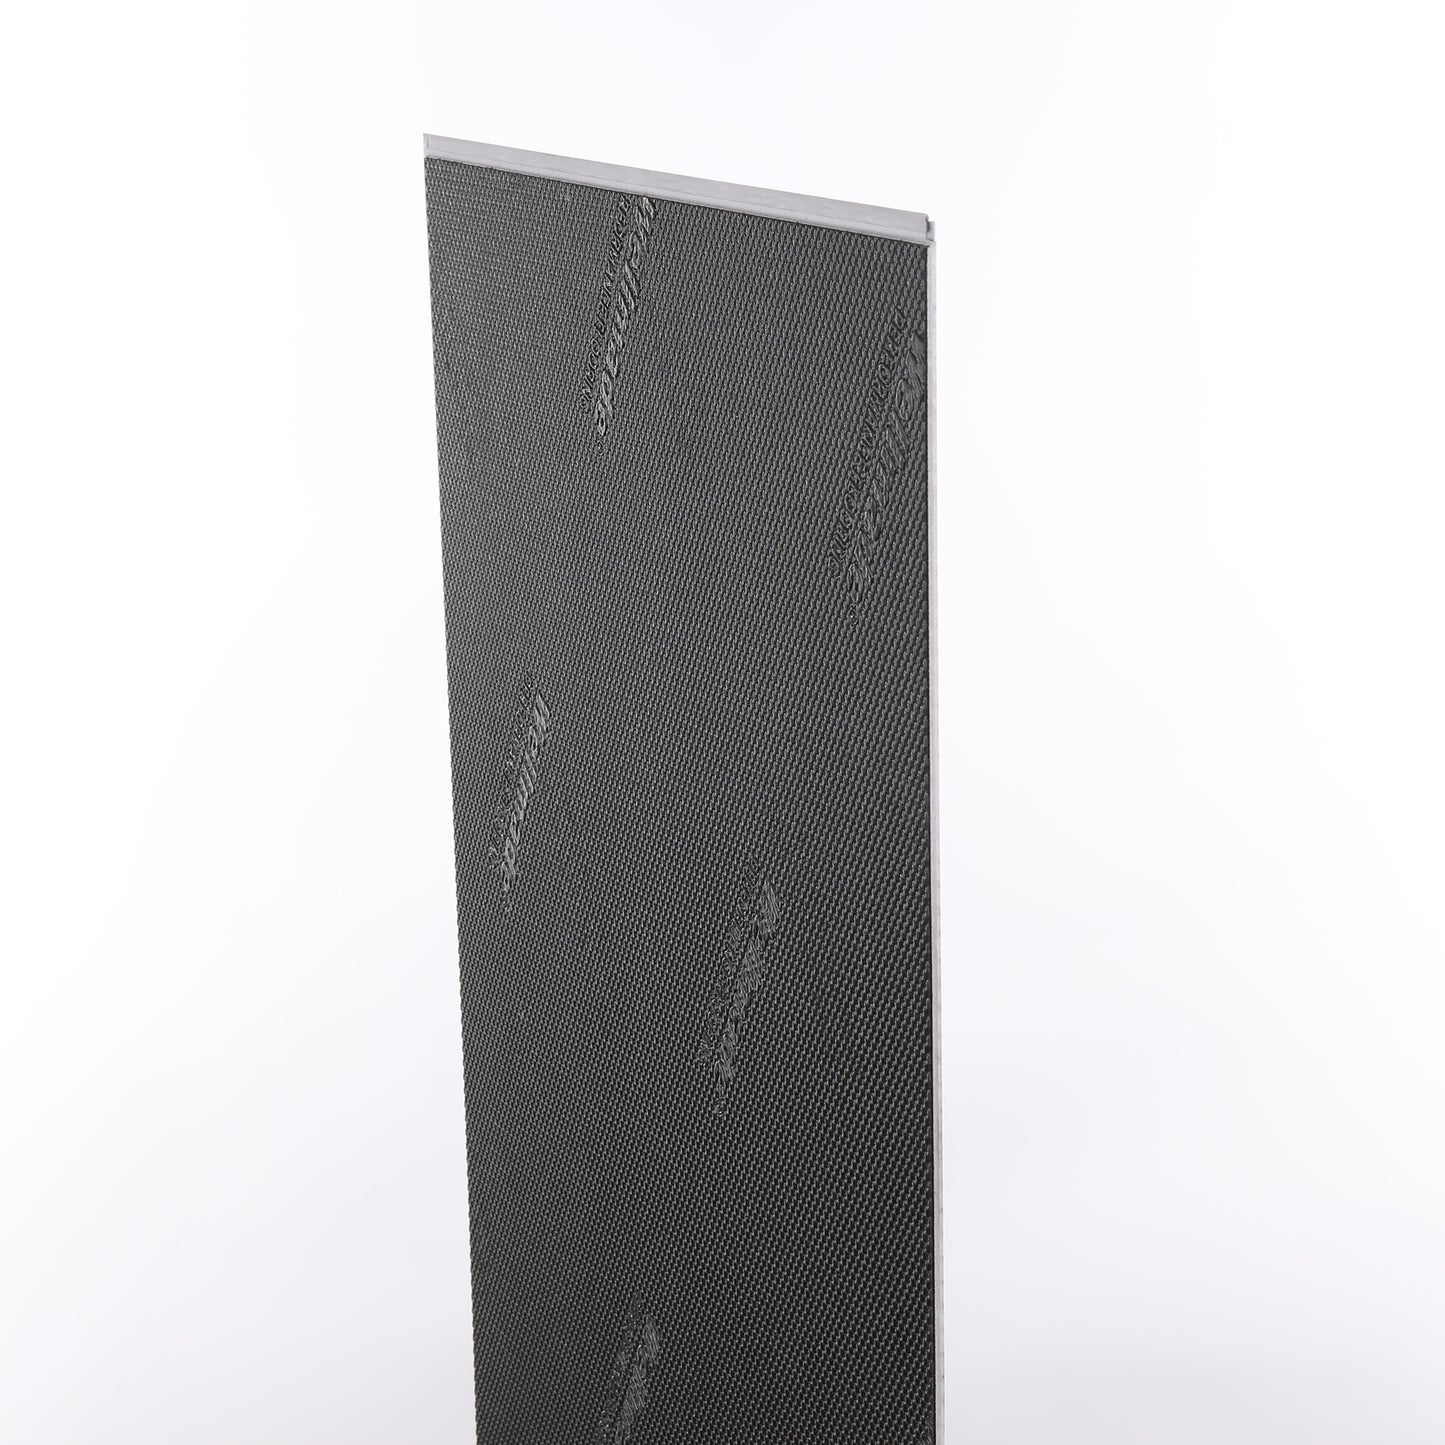 6mm Vatican Travetine HDPC® Waterproof Luxury Vinyl Tile Flooring 12 in. Wide x 24 in. Long